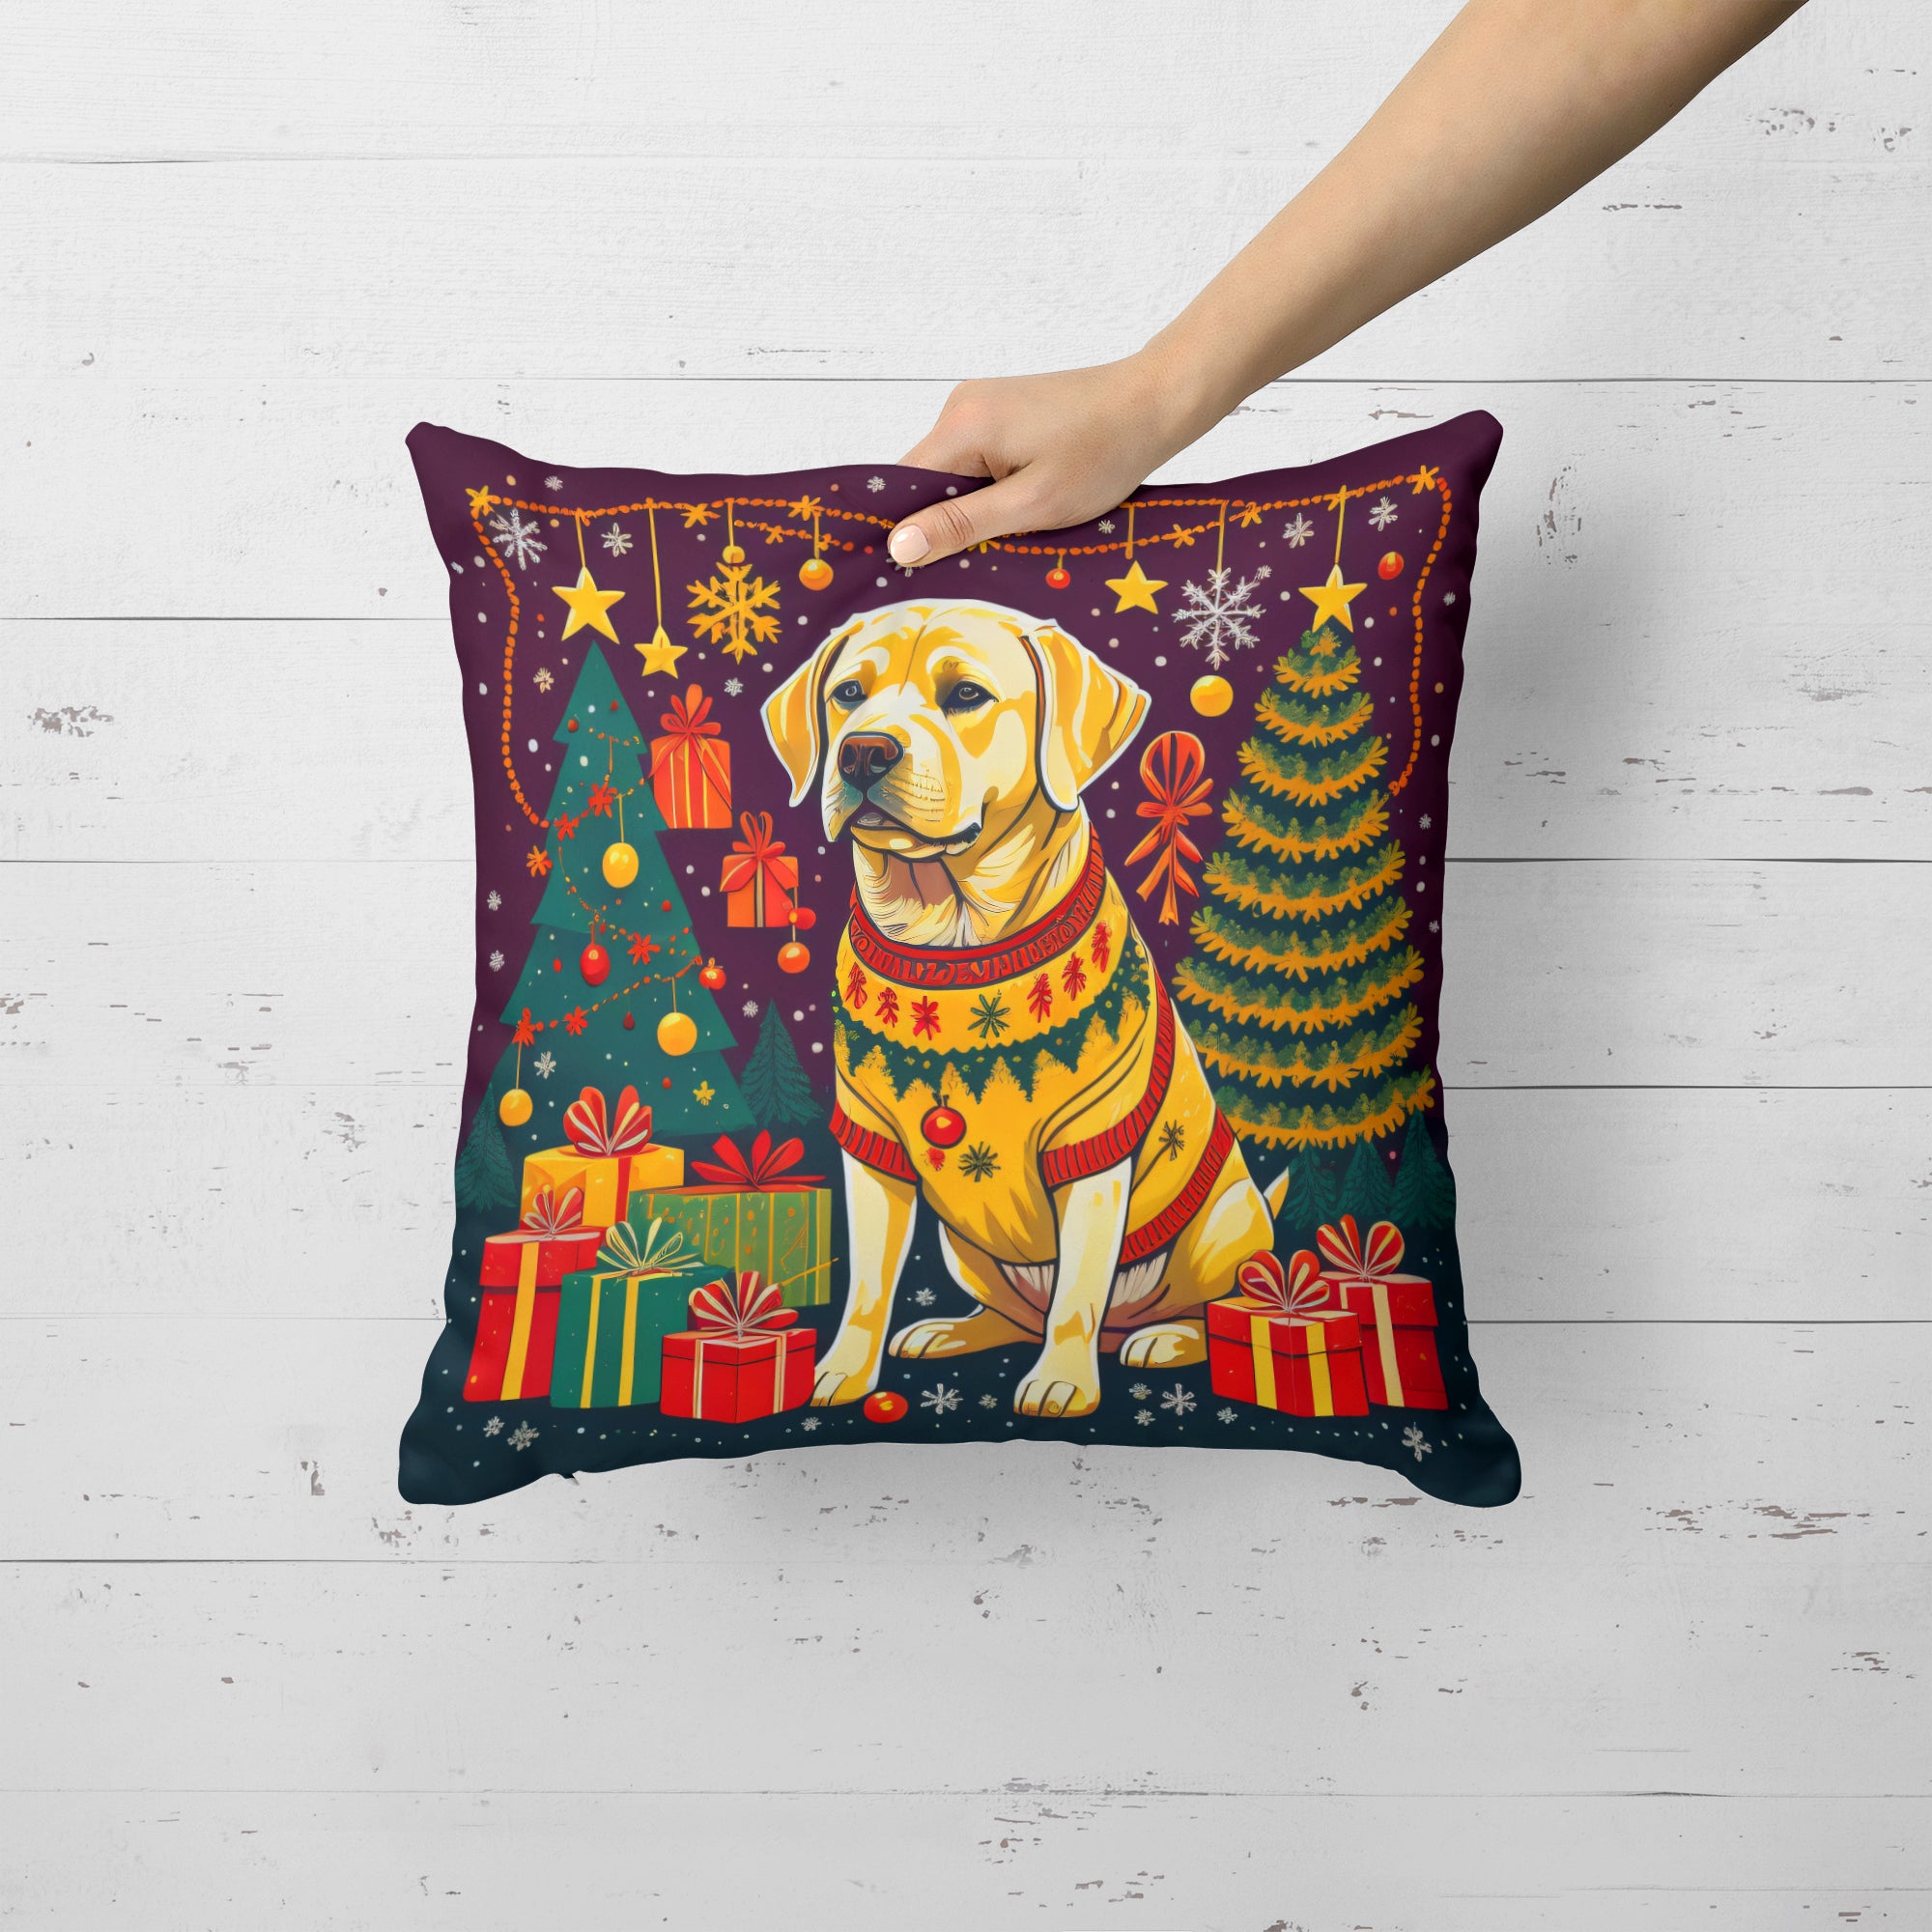 Buy this Yellow Labrador Retriever Christmas Fabric Decorative Pillow